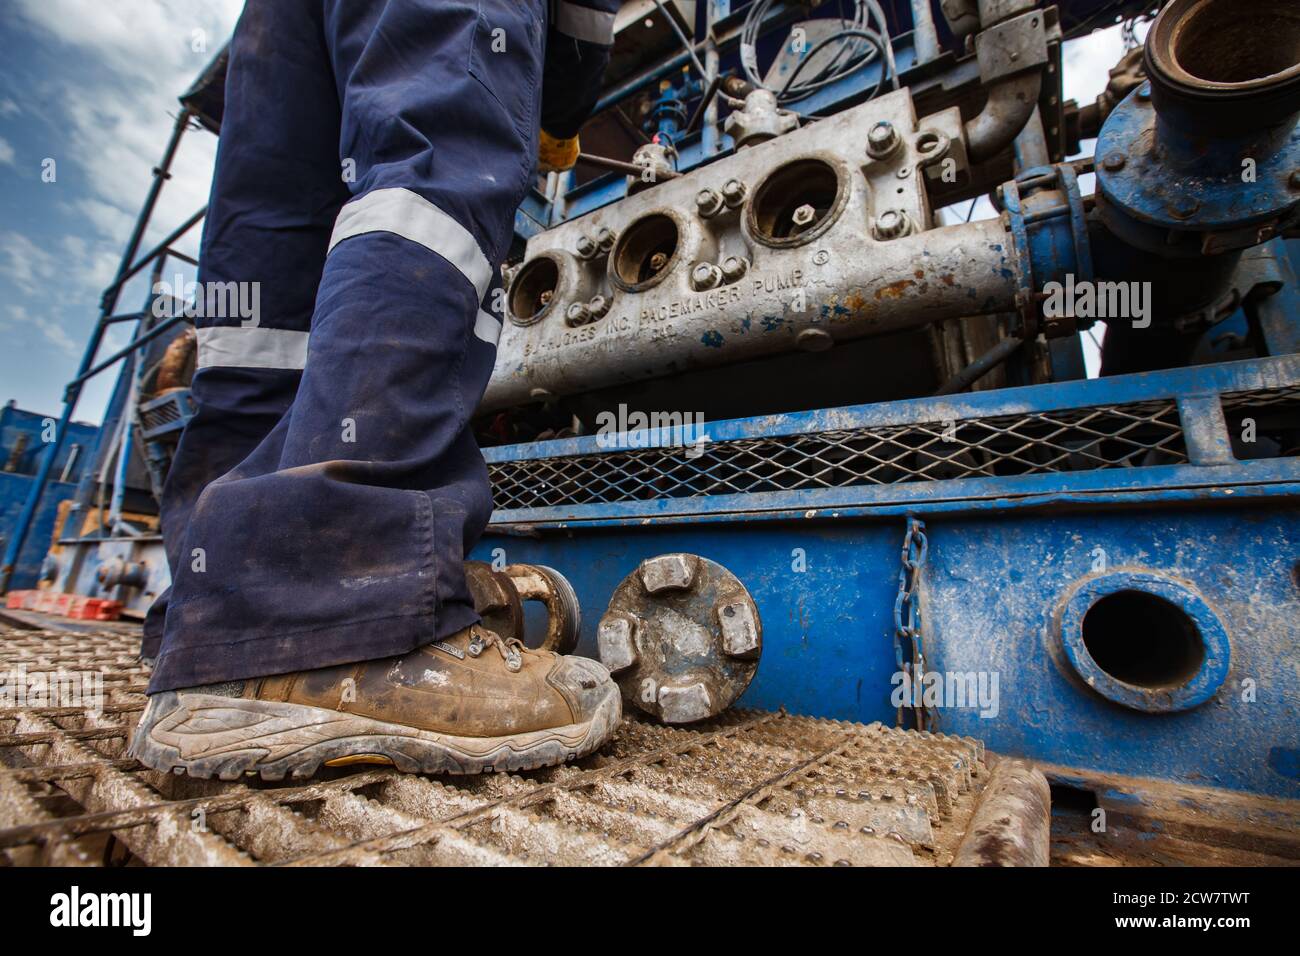 Zhaik-Munai oil deposit, Kazakhstan. Maintenance worker fixing mud pump engine. Baker Hughes company.  Close-up of dirty working boots, no face. Stock Photo